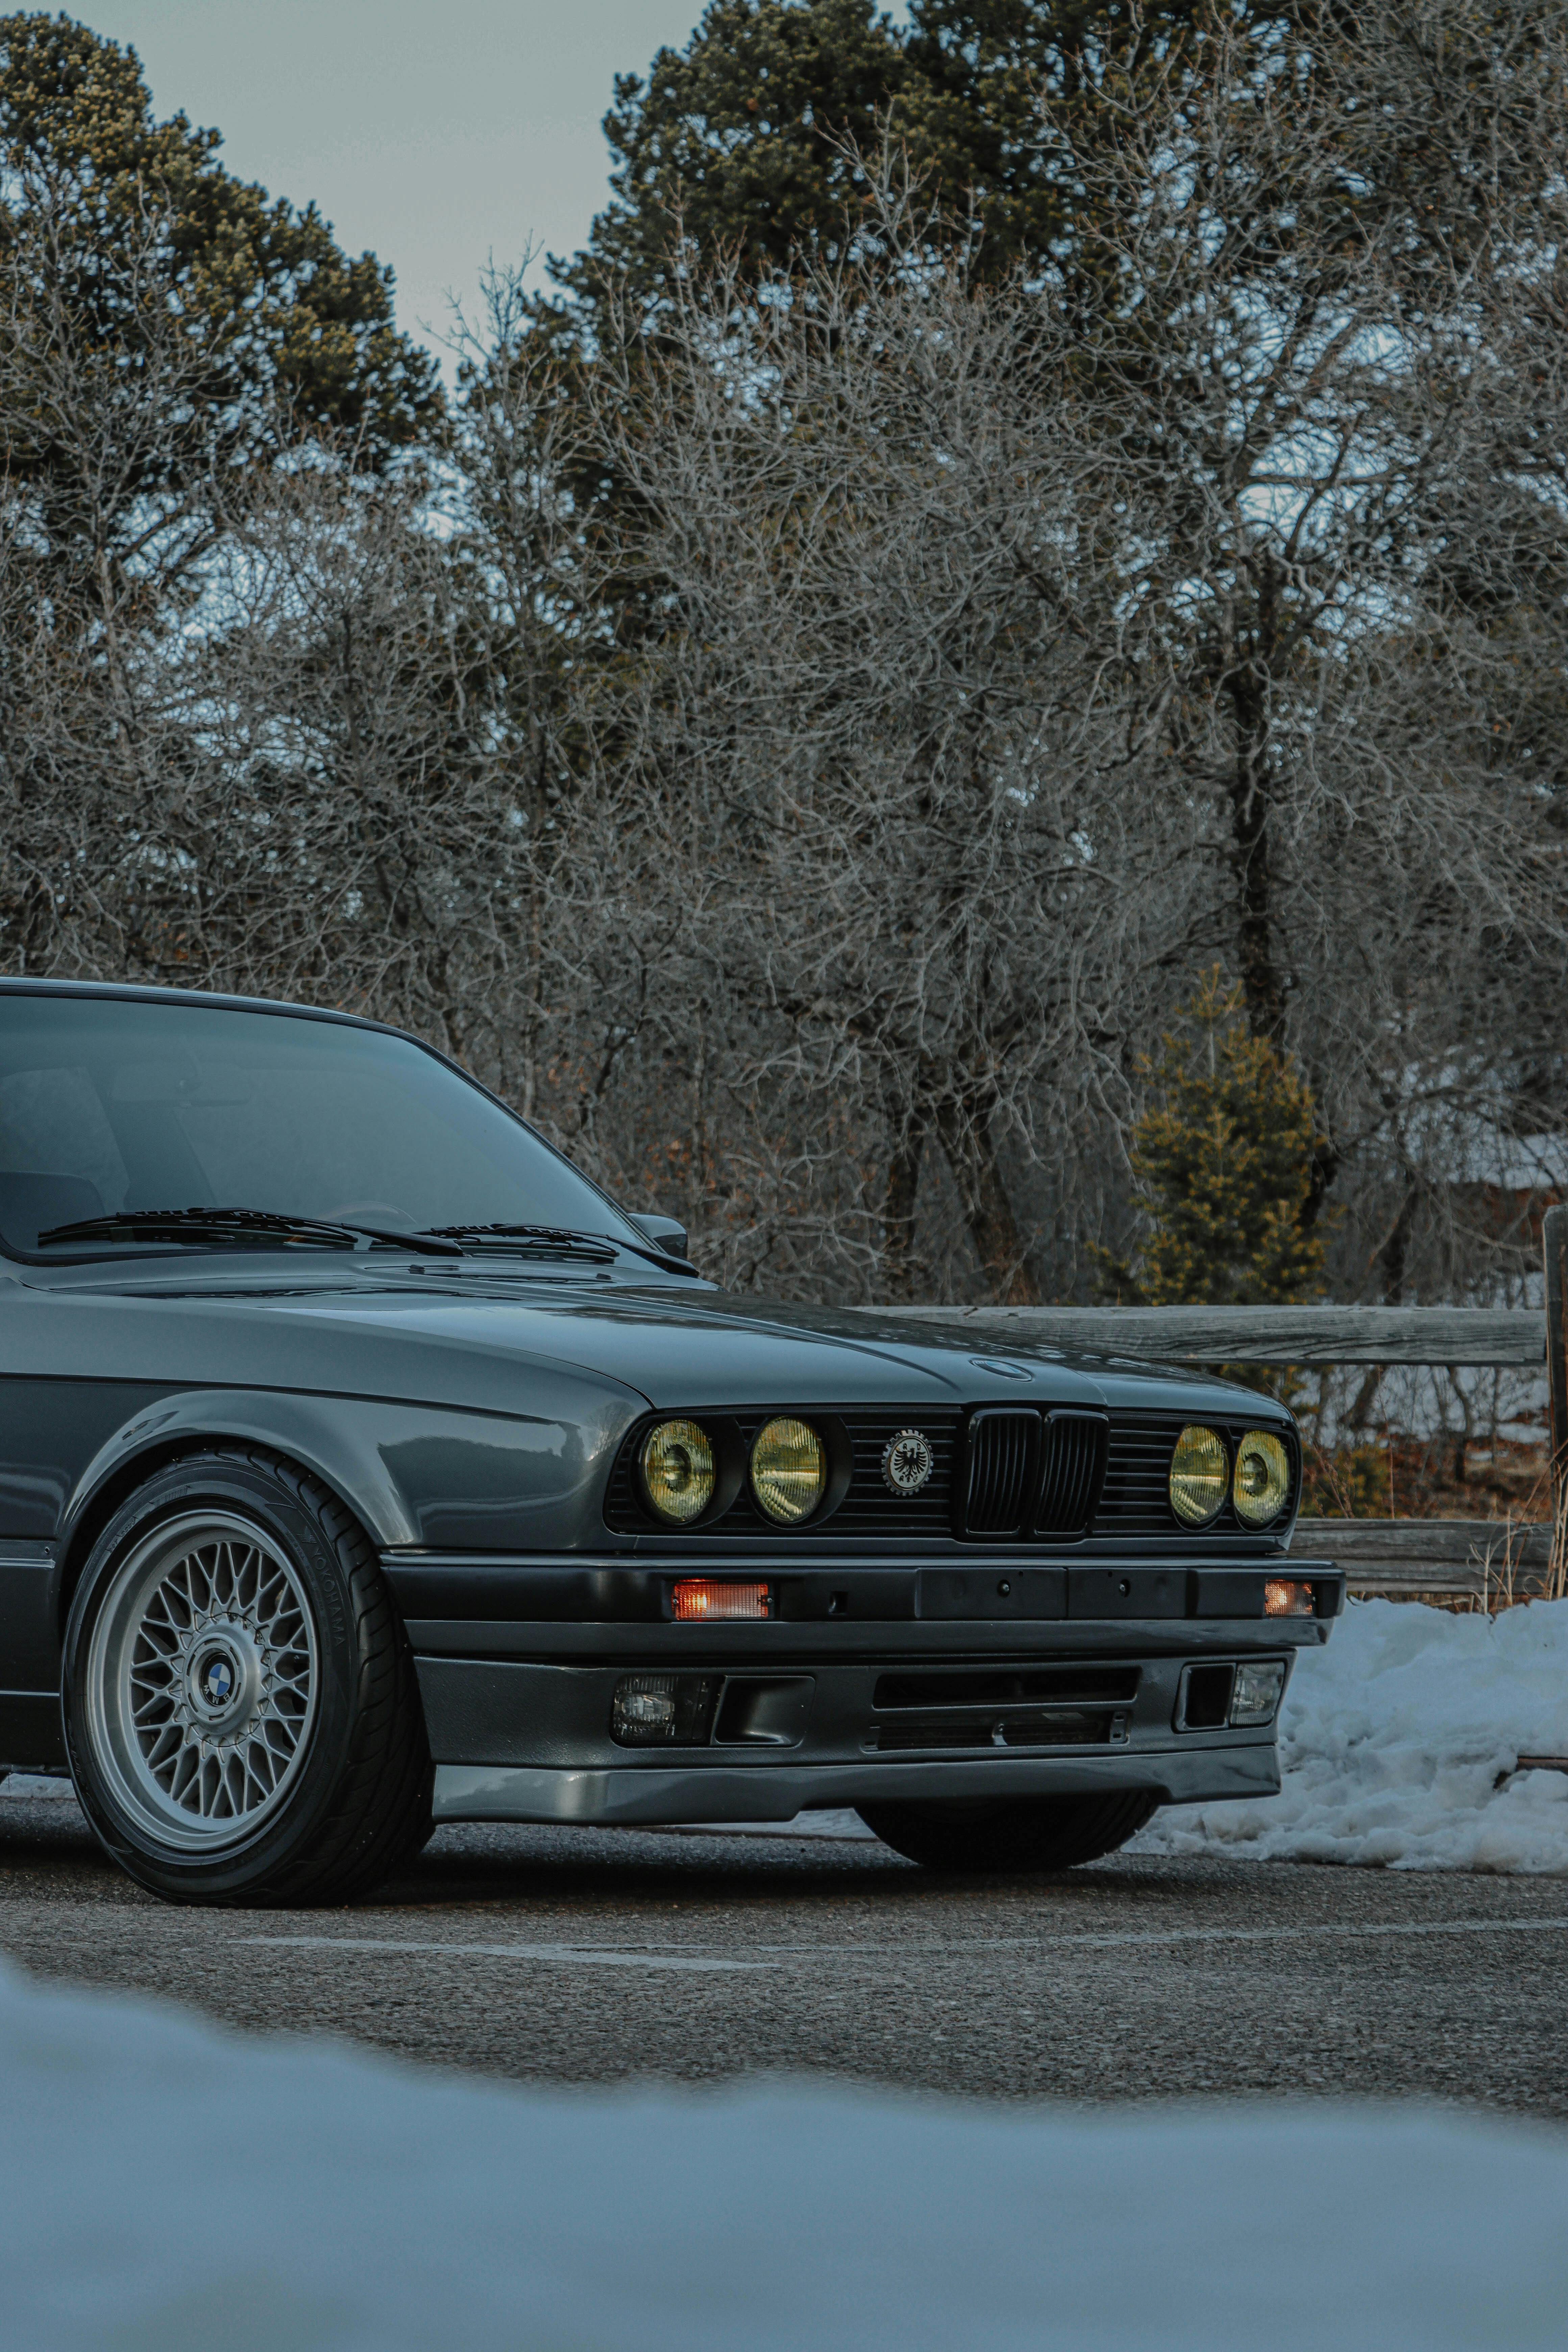 BMW E60 Parked on Grey Concrete Road · Free Stock Photo